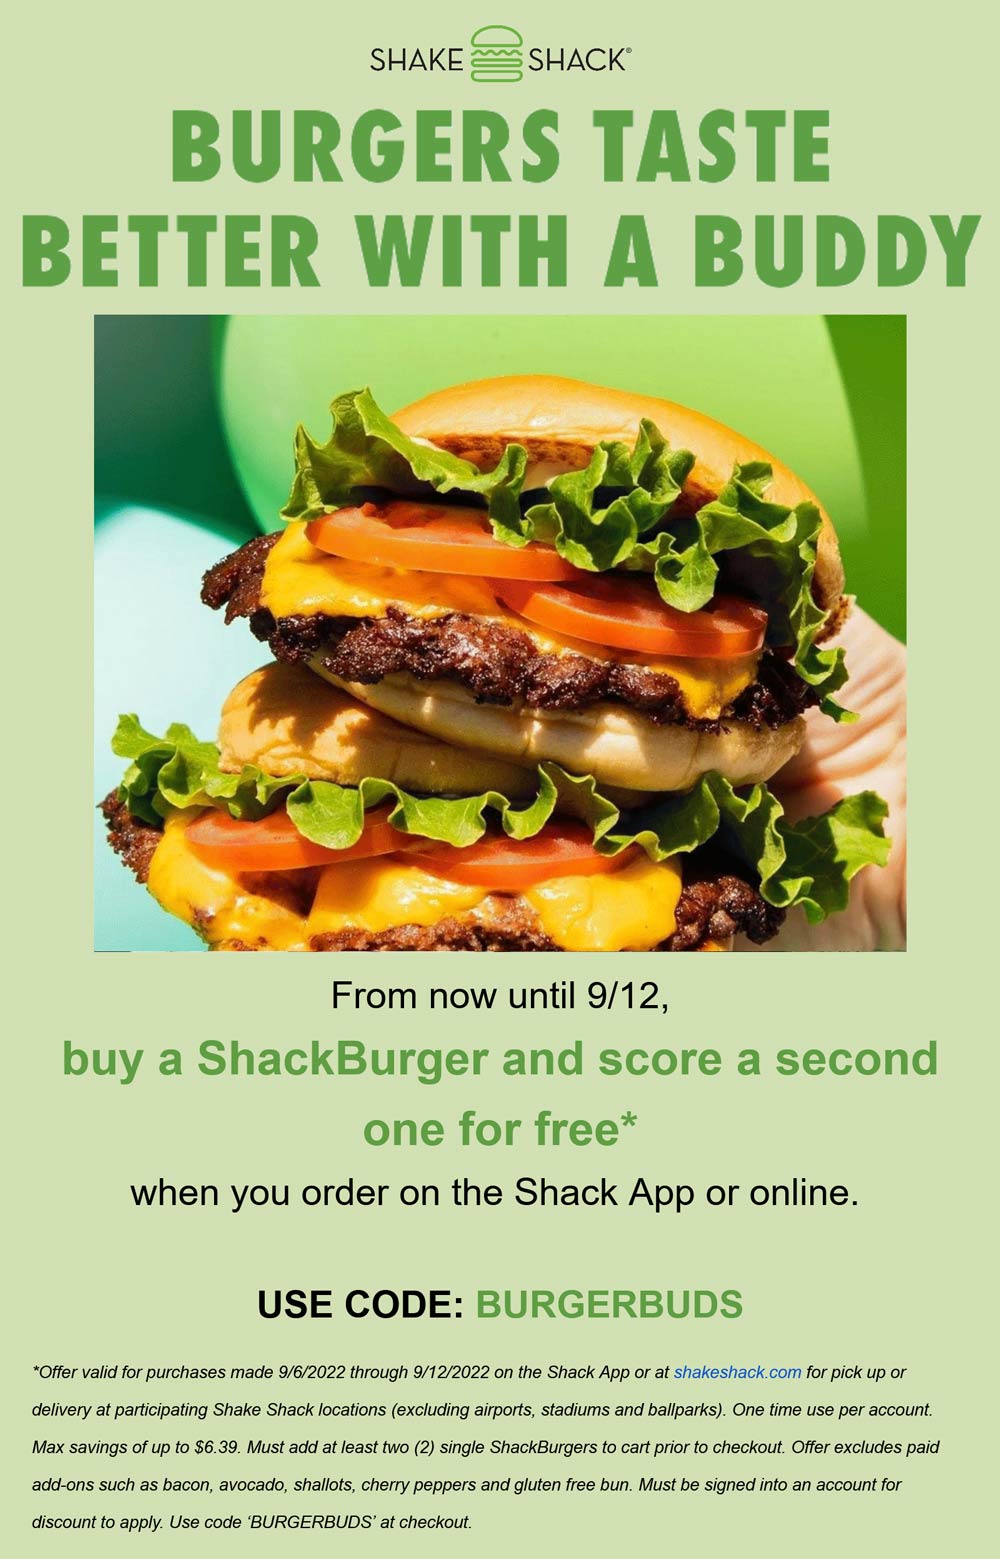 Shake Shack restaurants Coupon  Second cheeseburger free at Shake Shack via promo code BURGERBUDS #shakeshack 